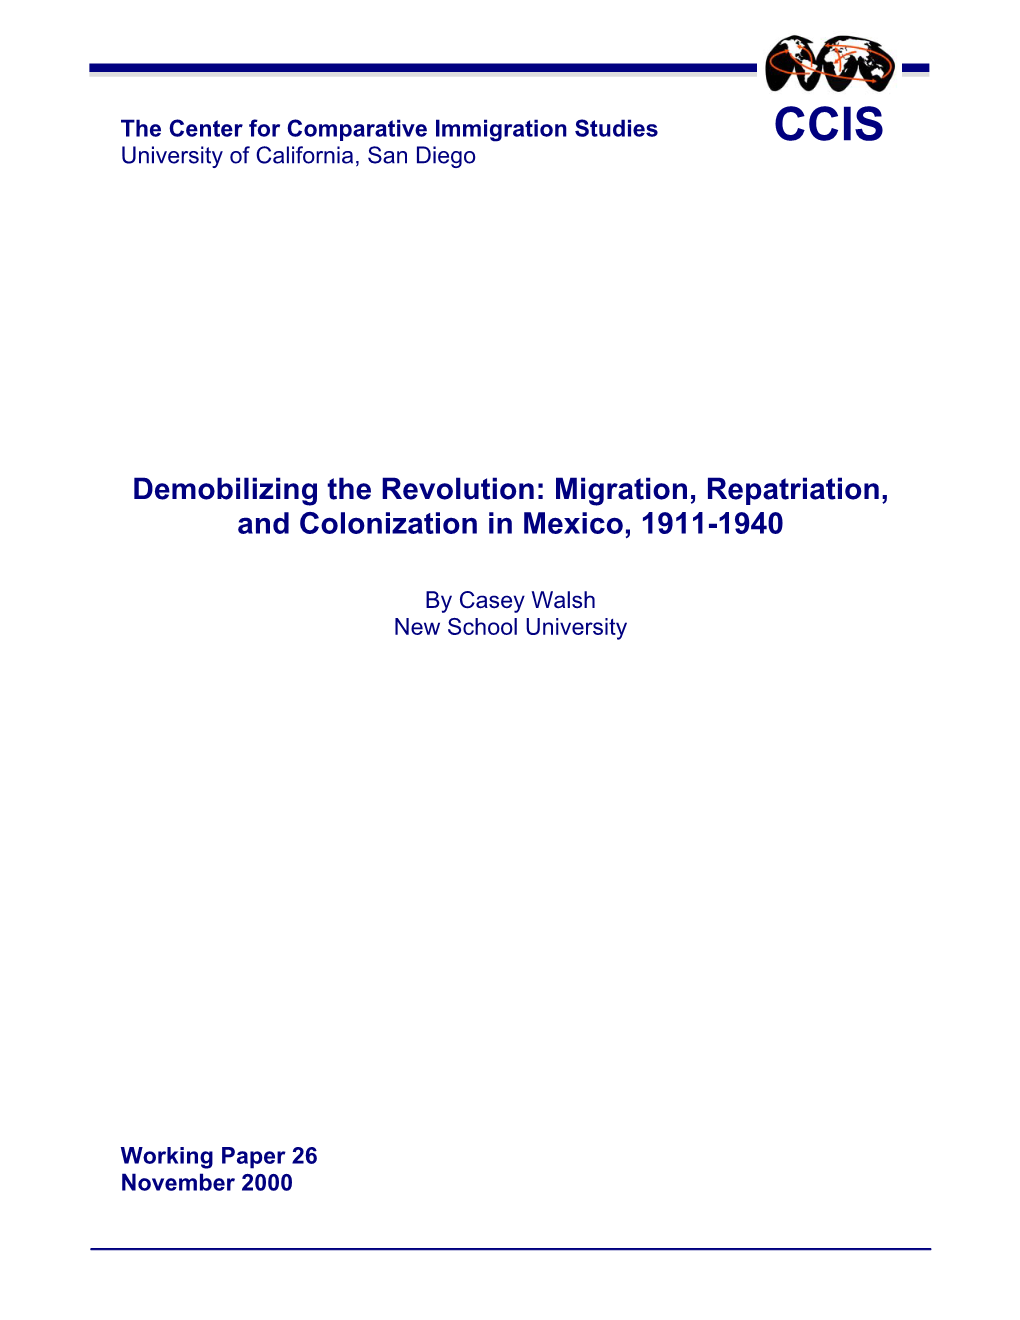 Migration, Repatriation, and Colonization in Mexico, 1911-1940